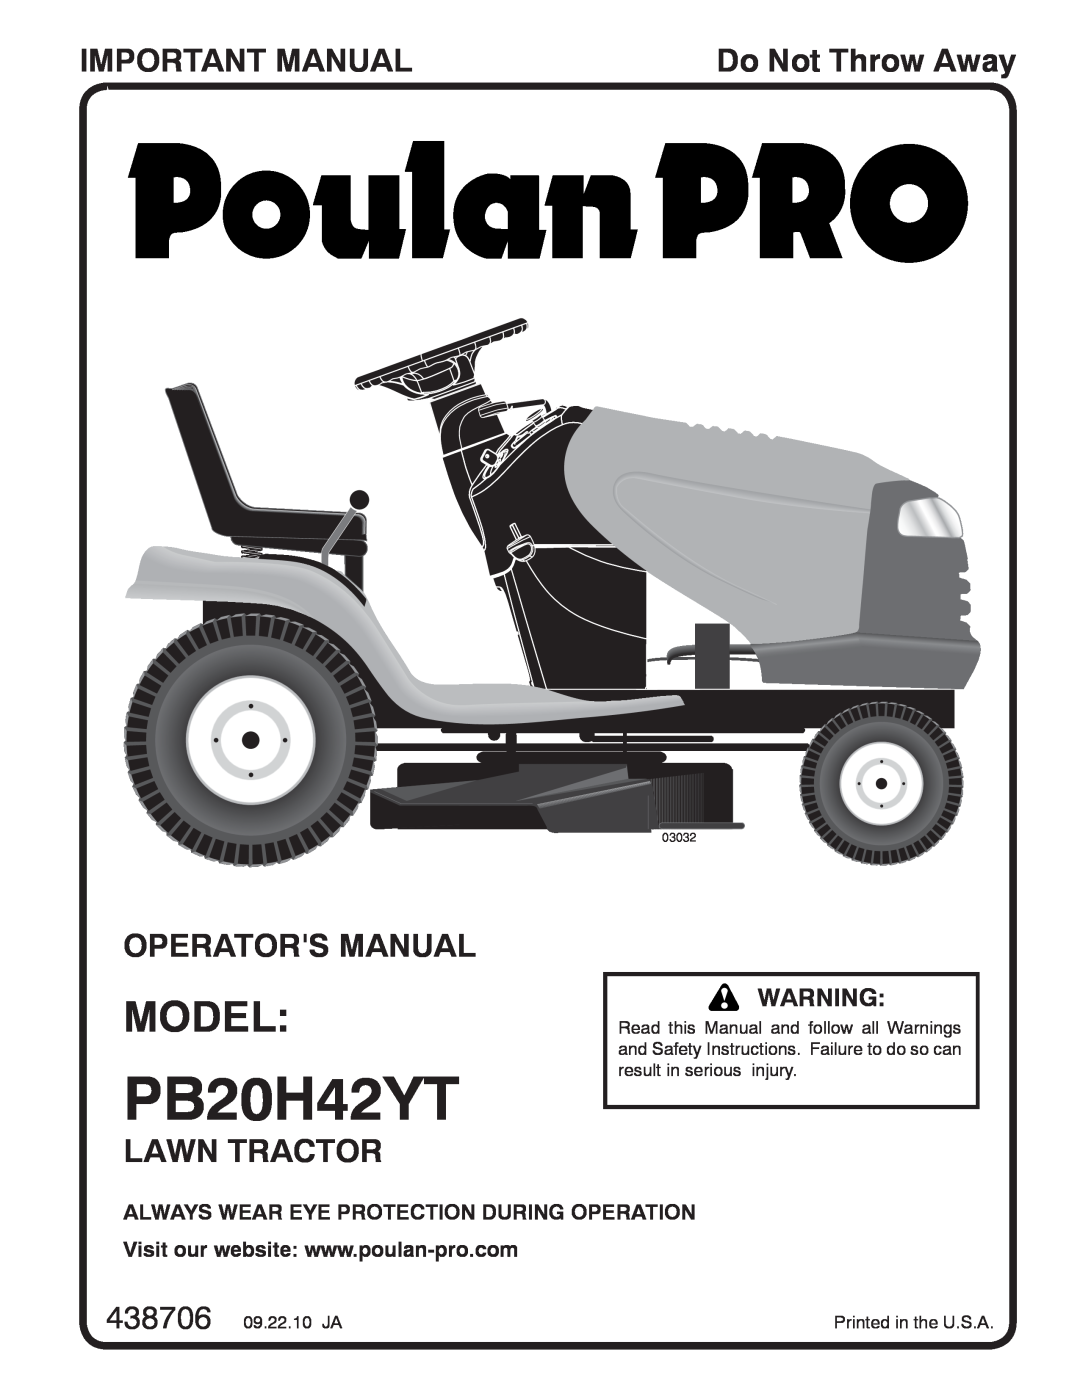 Poulan 96042012400 manual Model, Important Manual, Operators Manual, Lawn Tractor, PB20H42YT, Do Not Throw Away,  